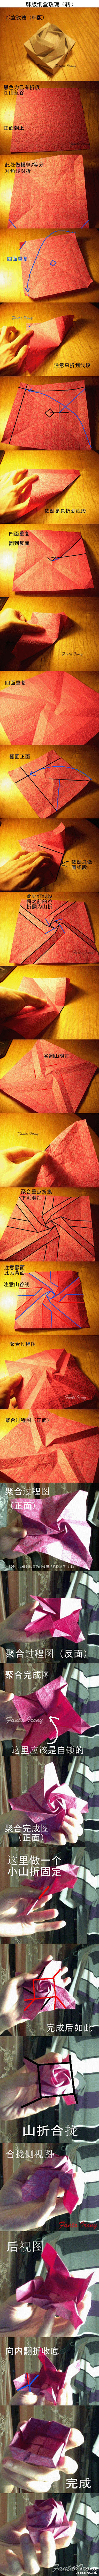 韩版纸盒玫瑰折纸~www.meether...